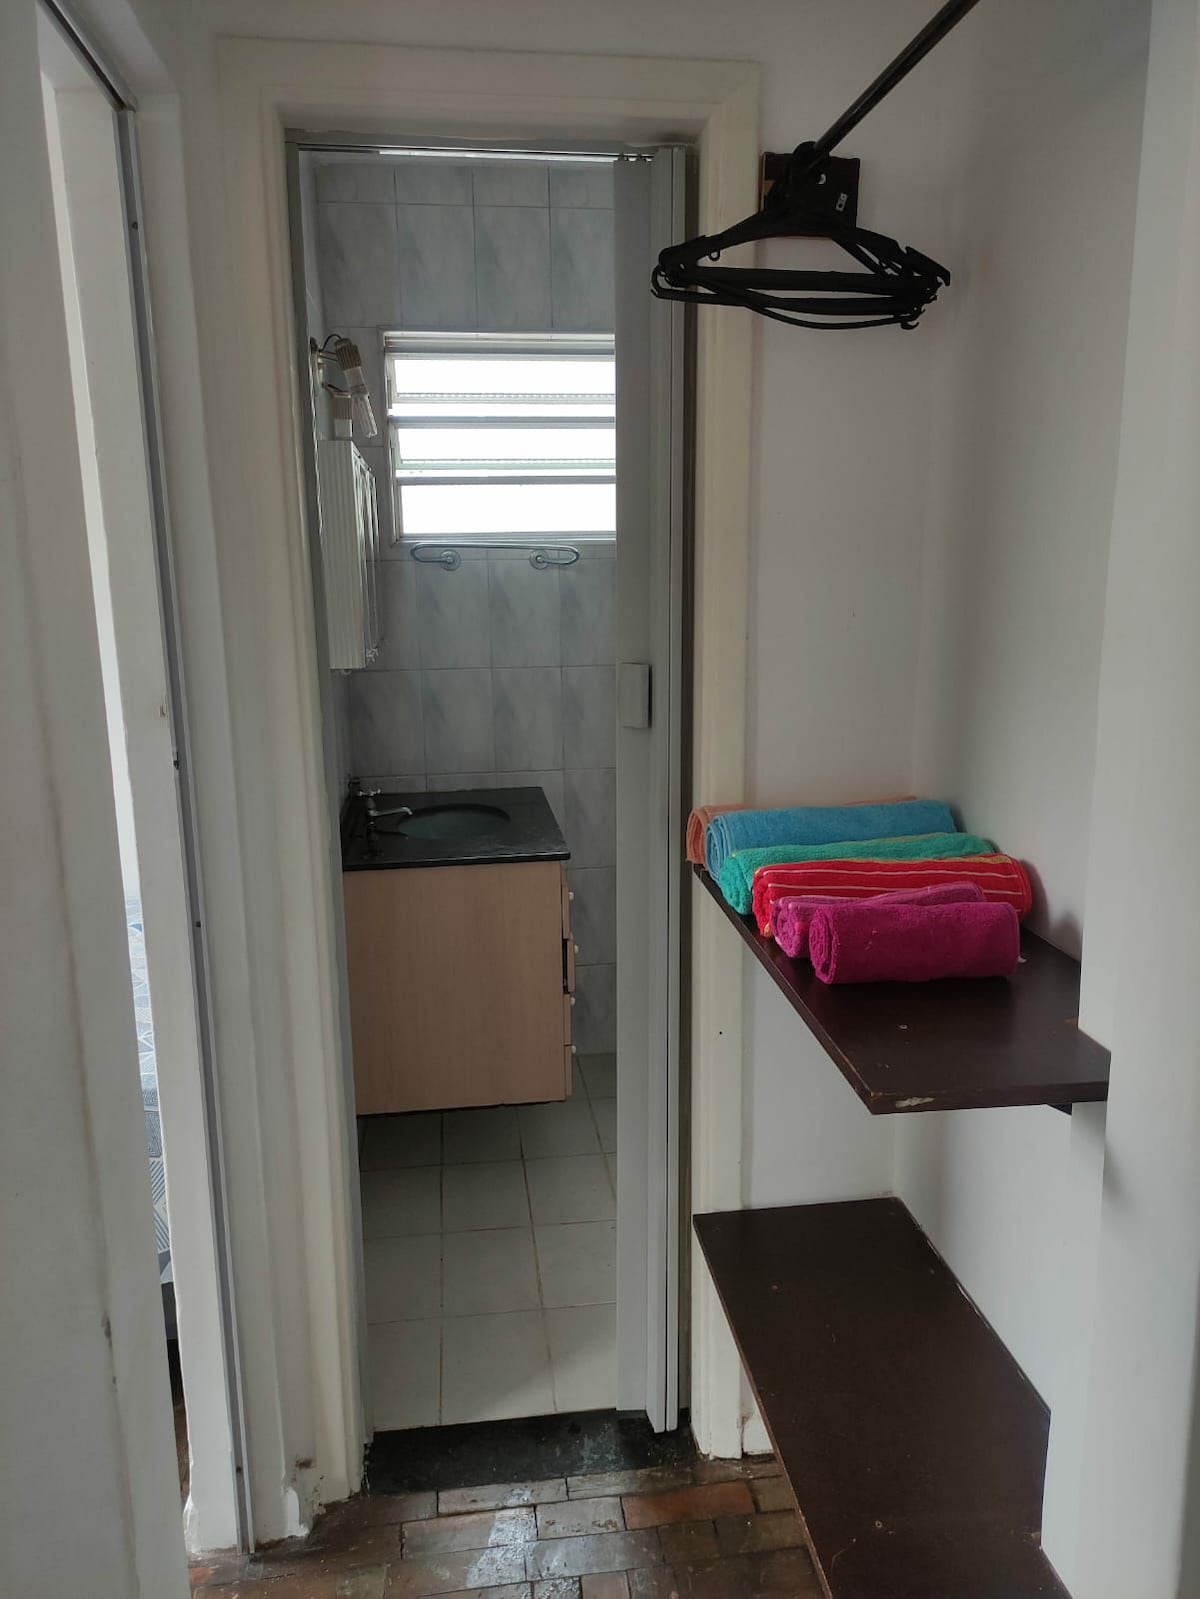 Airbnb apartamento na praia de Santos - SP